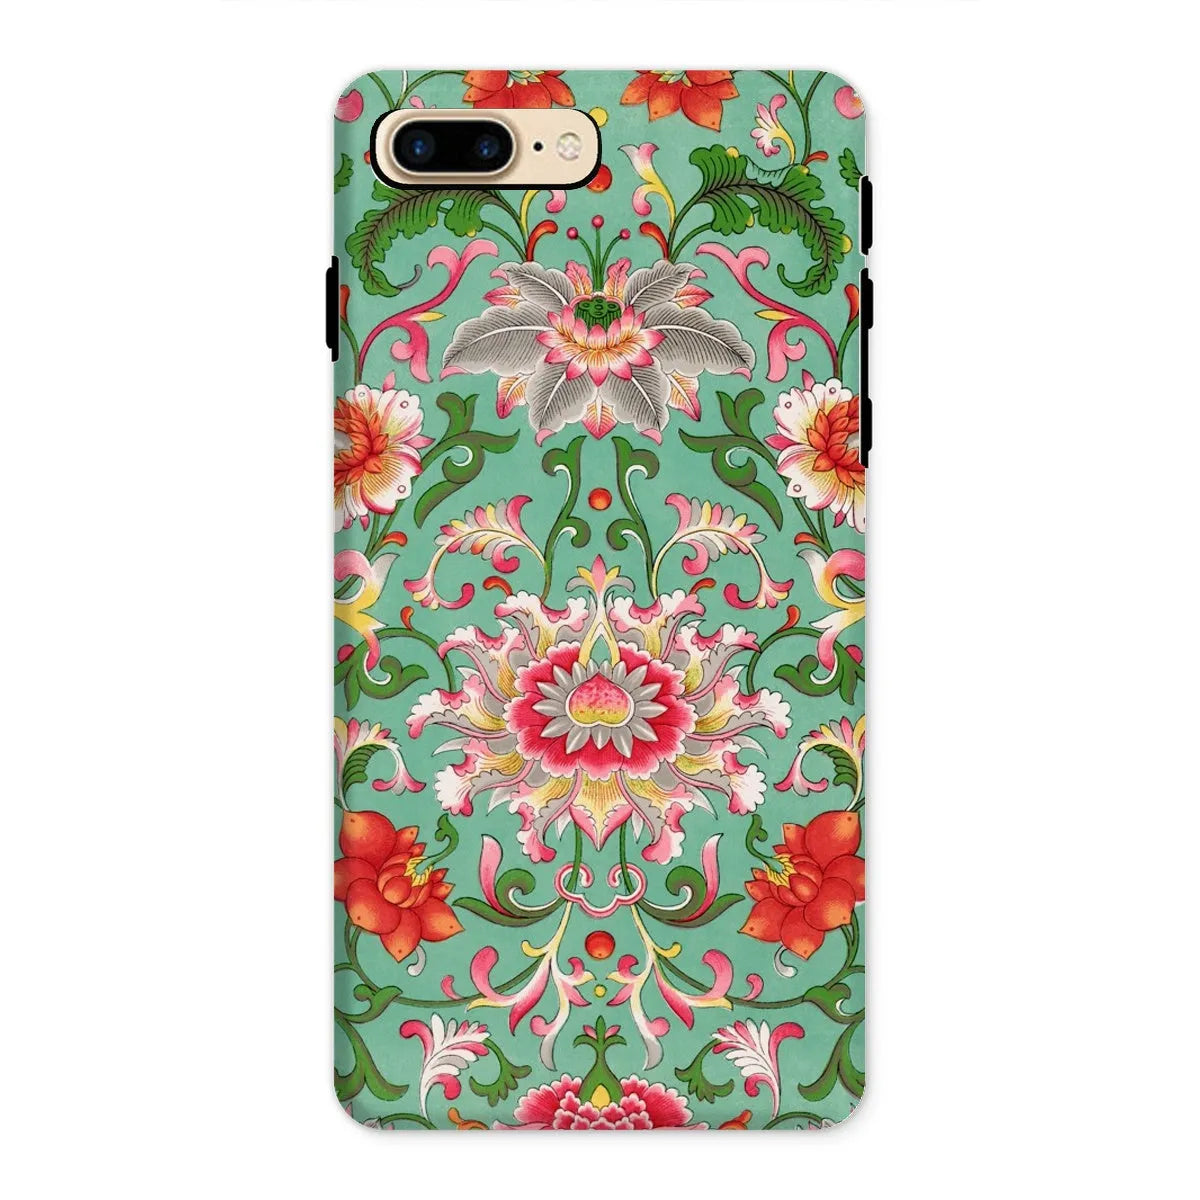 Chinese Floral Aesthetic Art Phone Case - Owen Jones - Iphone 8 Plus / Matte - Mobile Phone Cases - Aesthetic Art